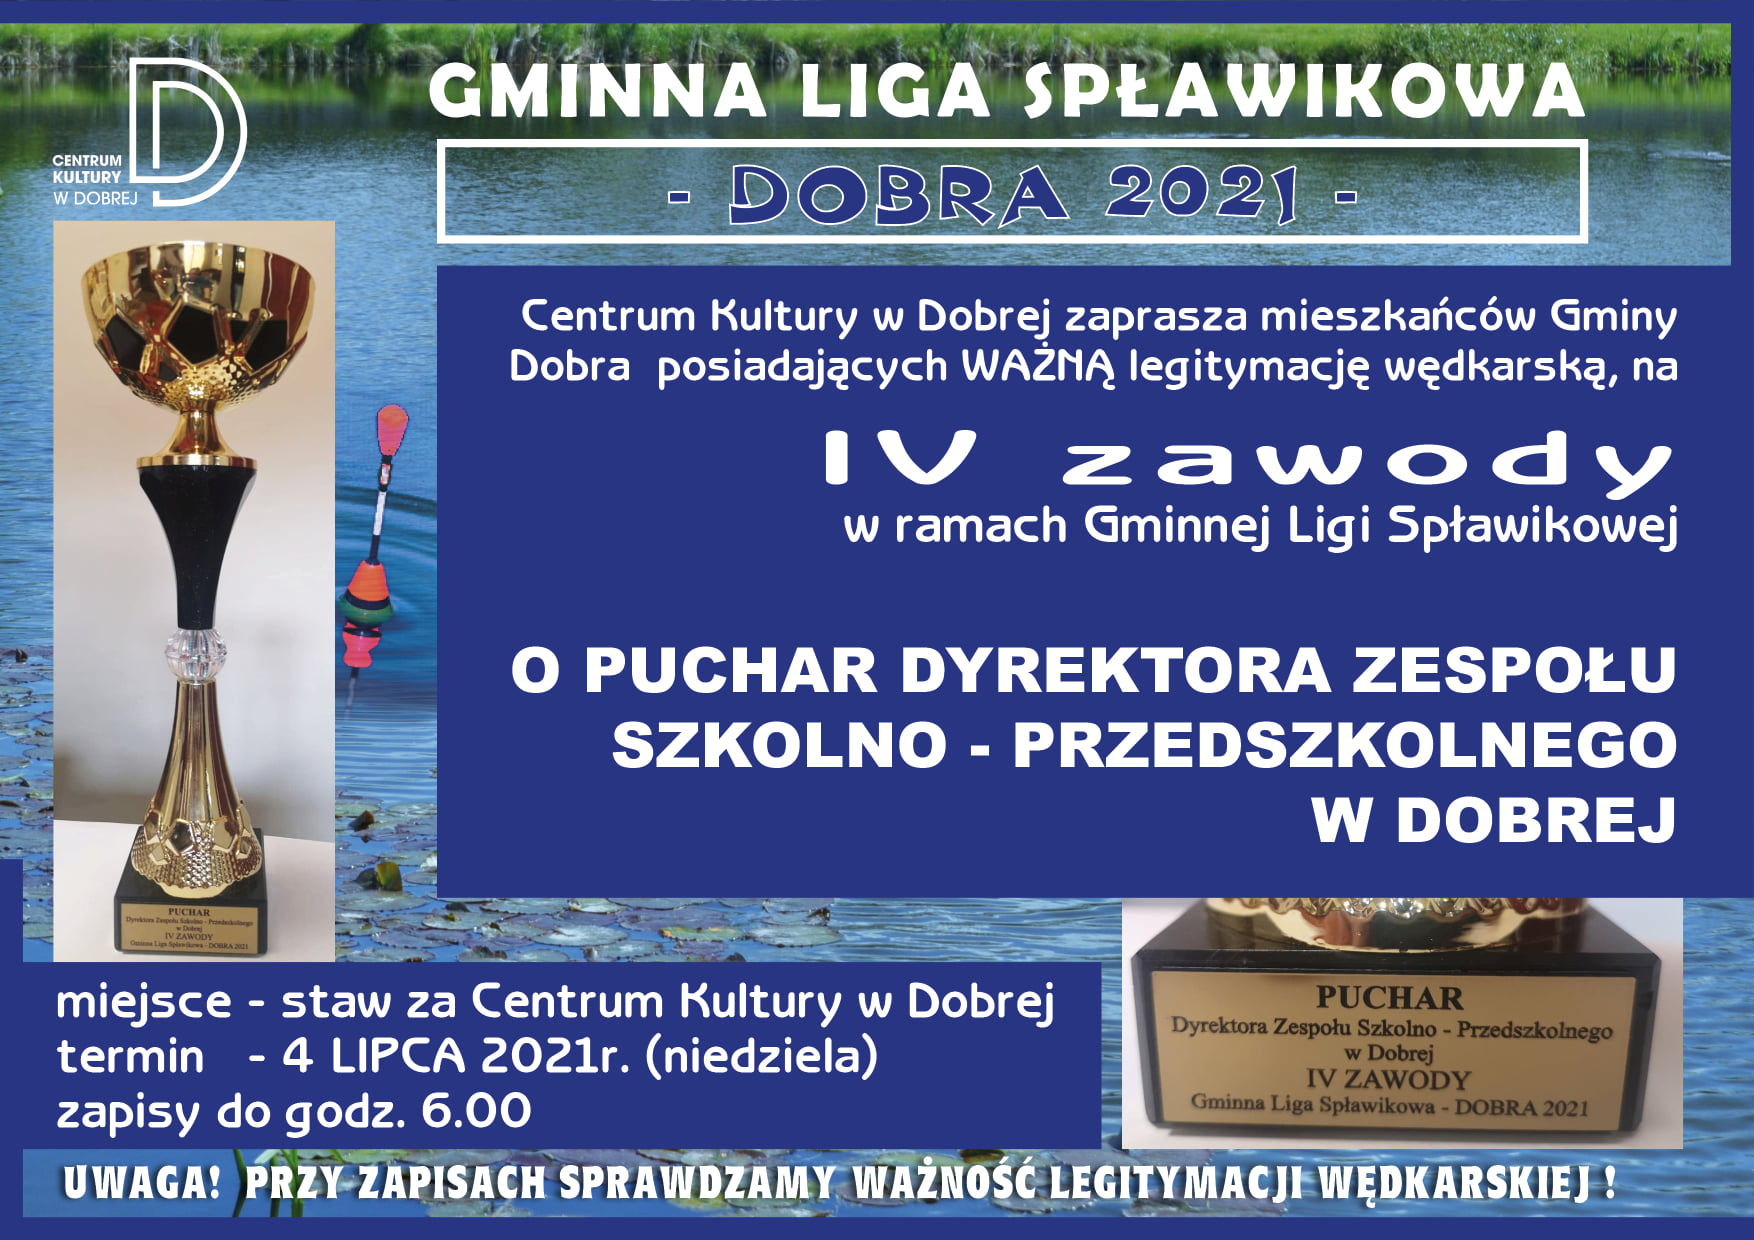 You are currently viewing Gminna Liga Spławikowa